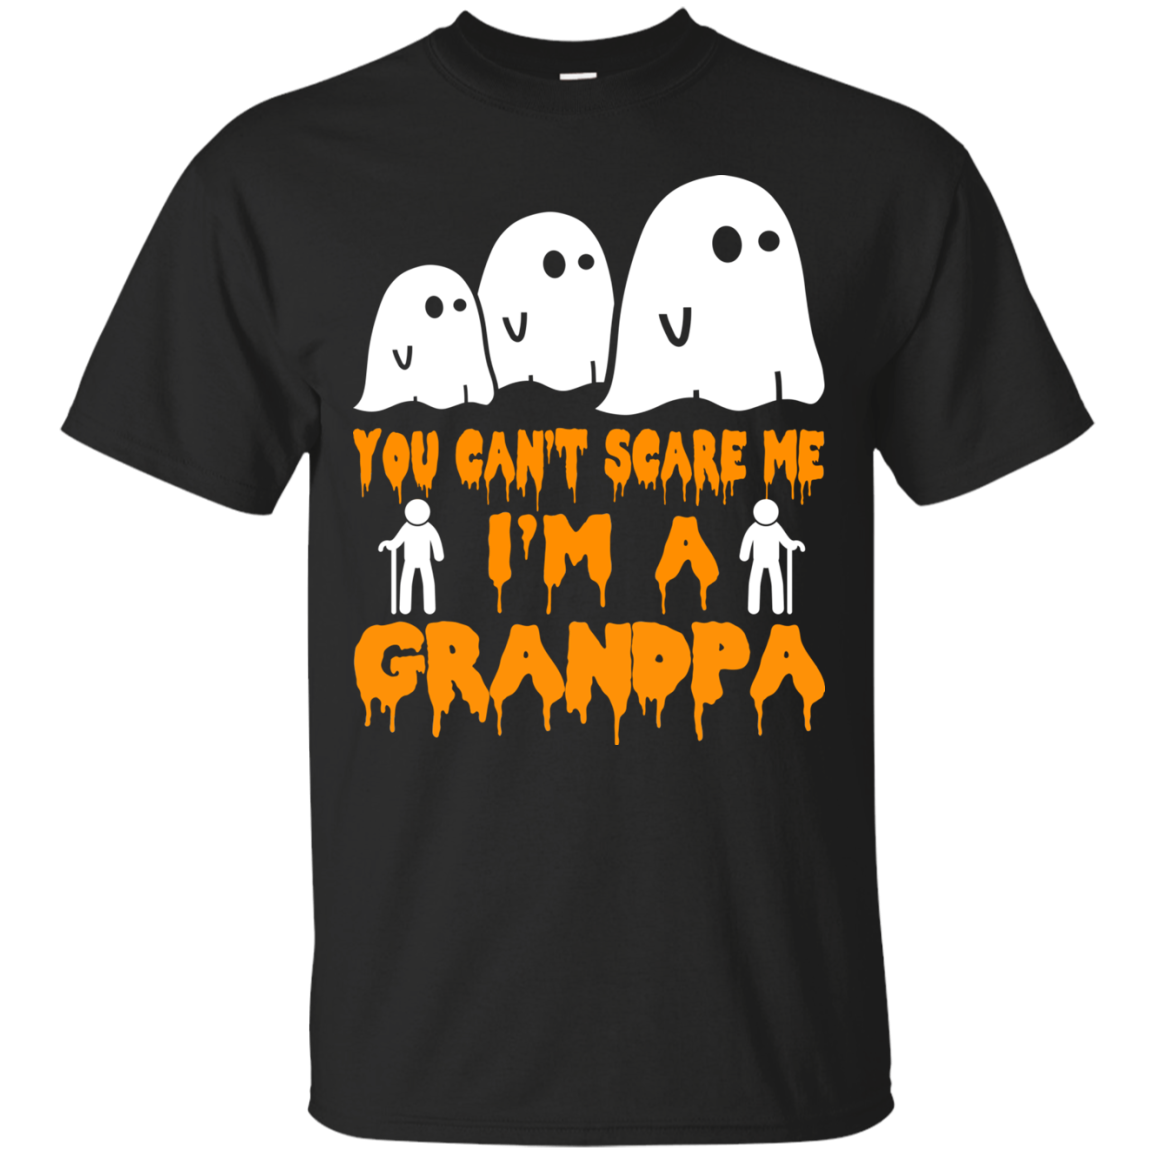 You can’t scare me I'm a Grandpa shirt, hoodie, tank